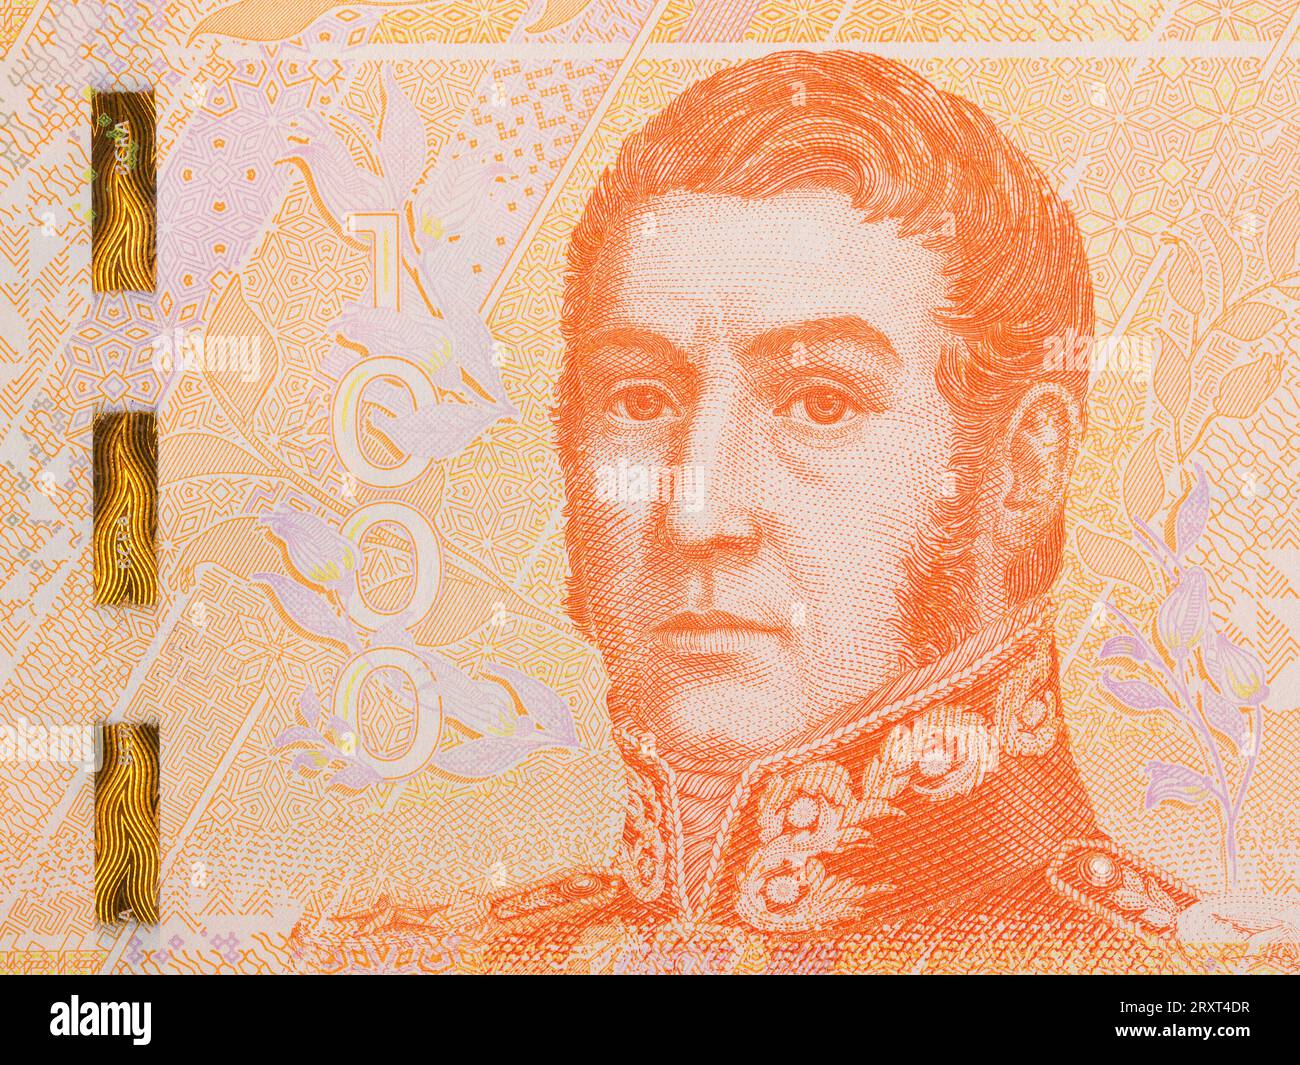 Jose de San Martin a portrait from Argentine money - peso Stock Photo